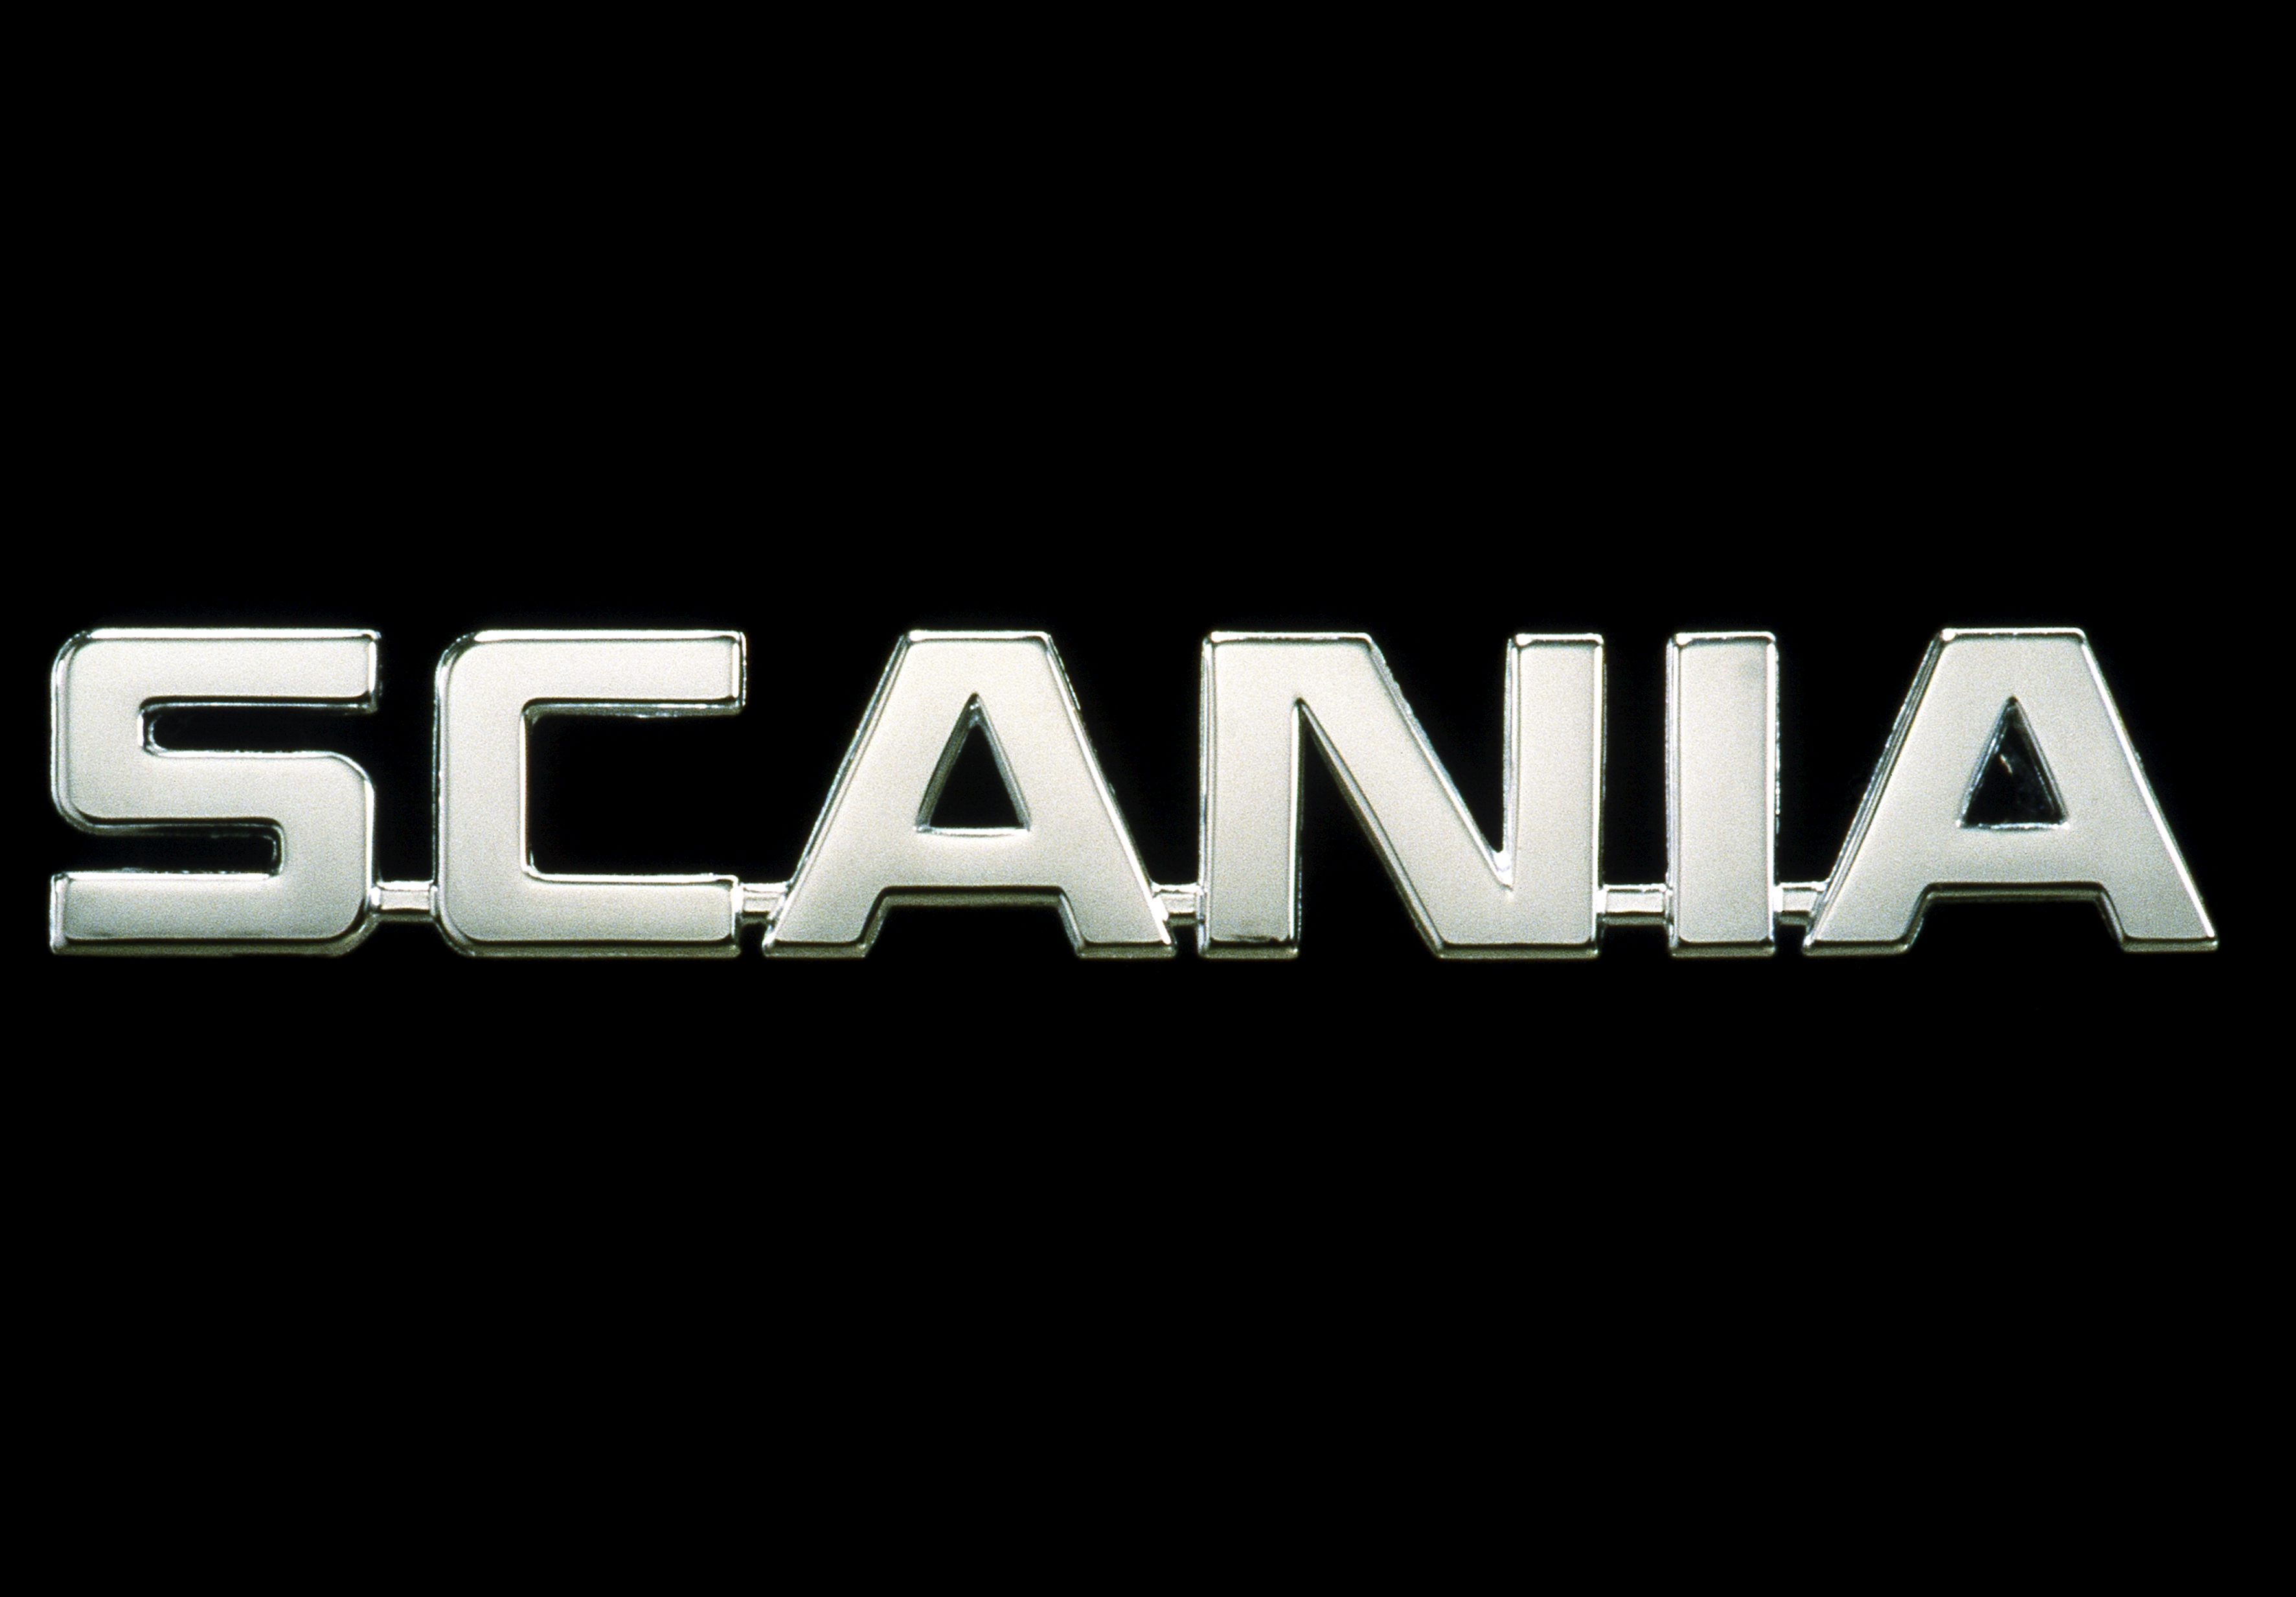 Scania , HD Wallpaper & Backgrounds